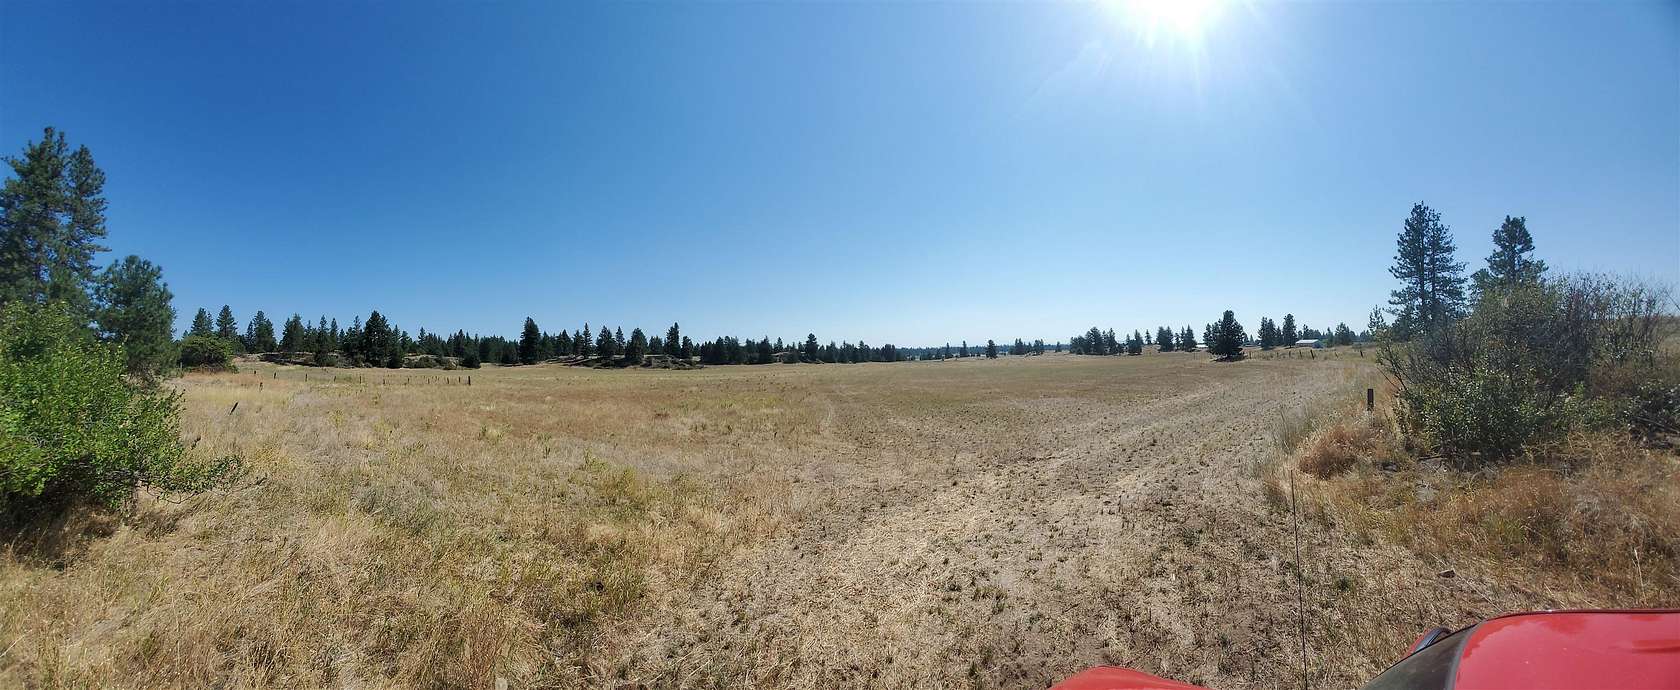 59.74 Acres of Land for Sale in Spokane, Washington